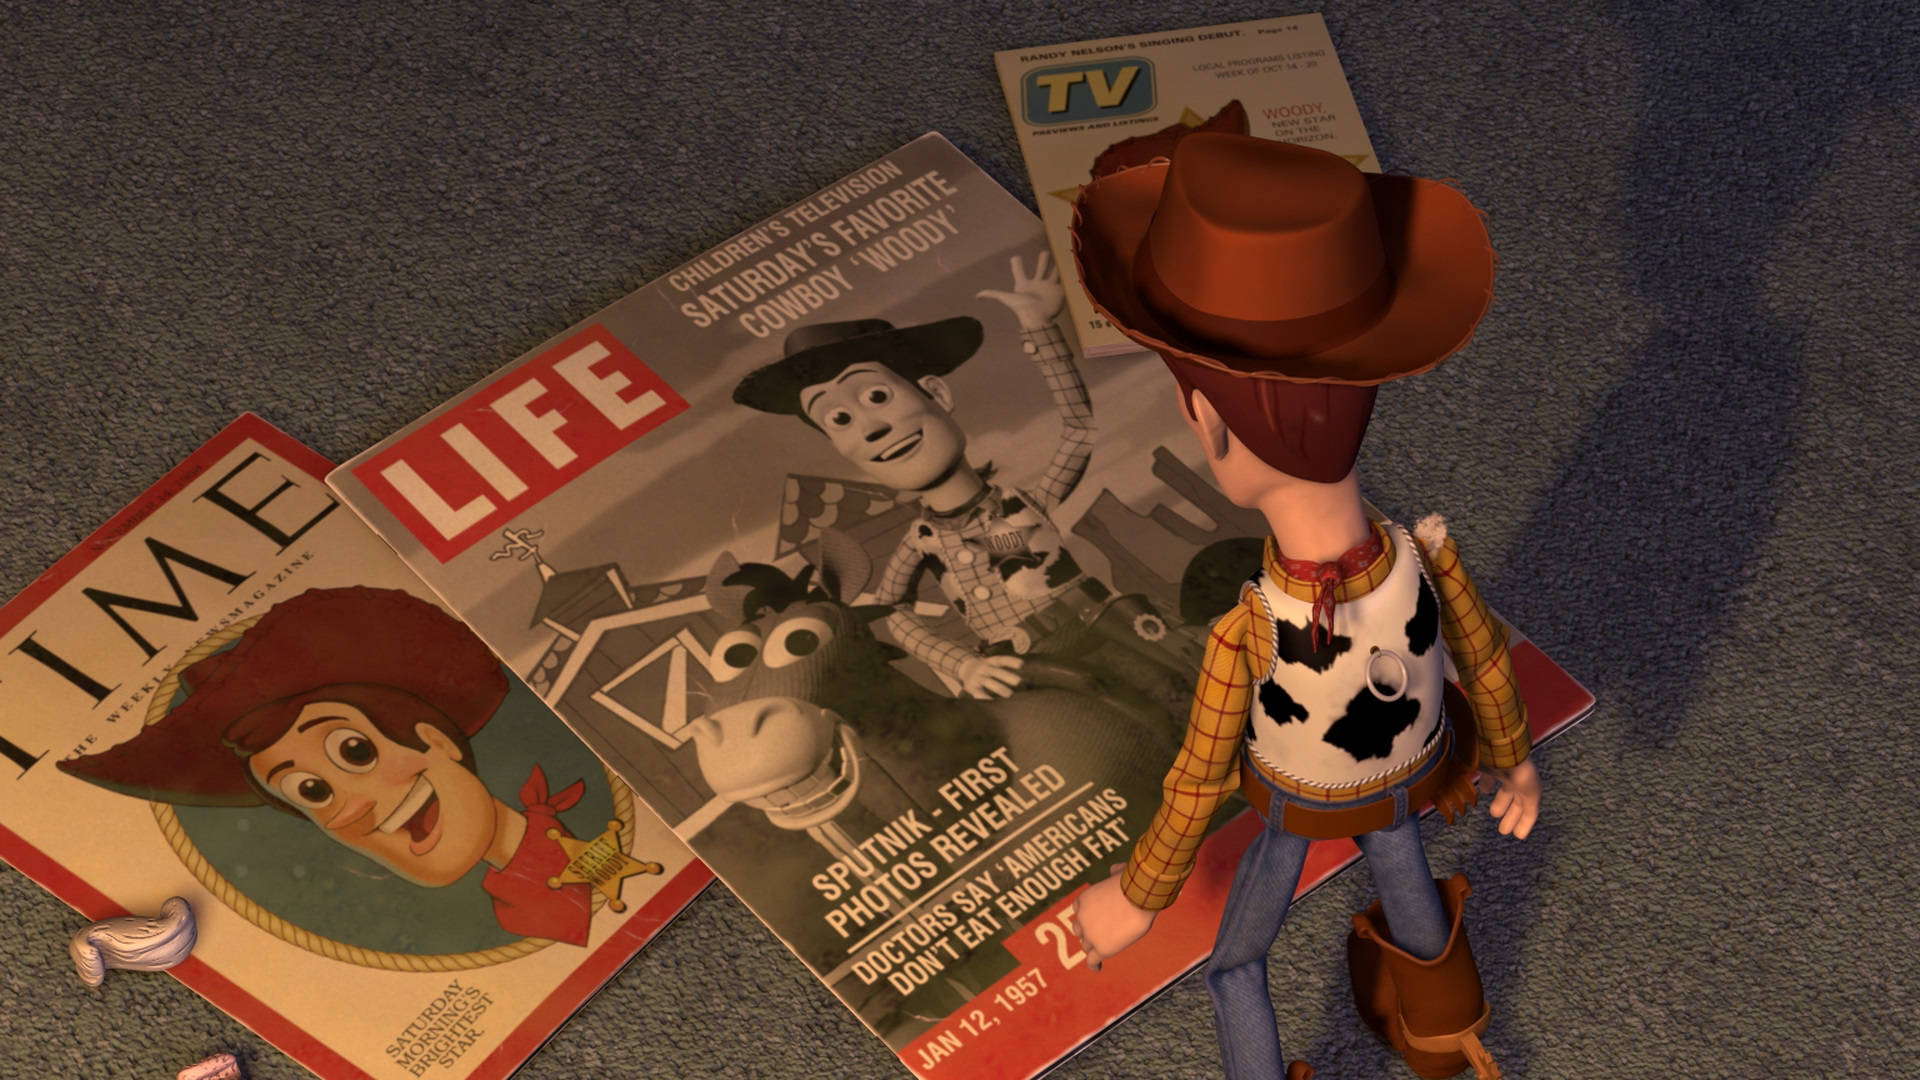 Woodyin Zeitschrift Toy Story 2. Wallpaper